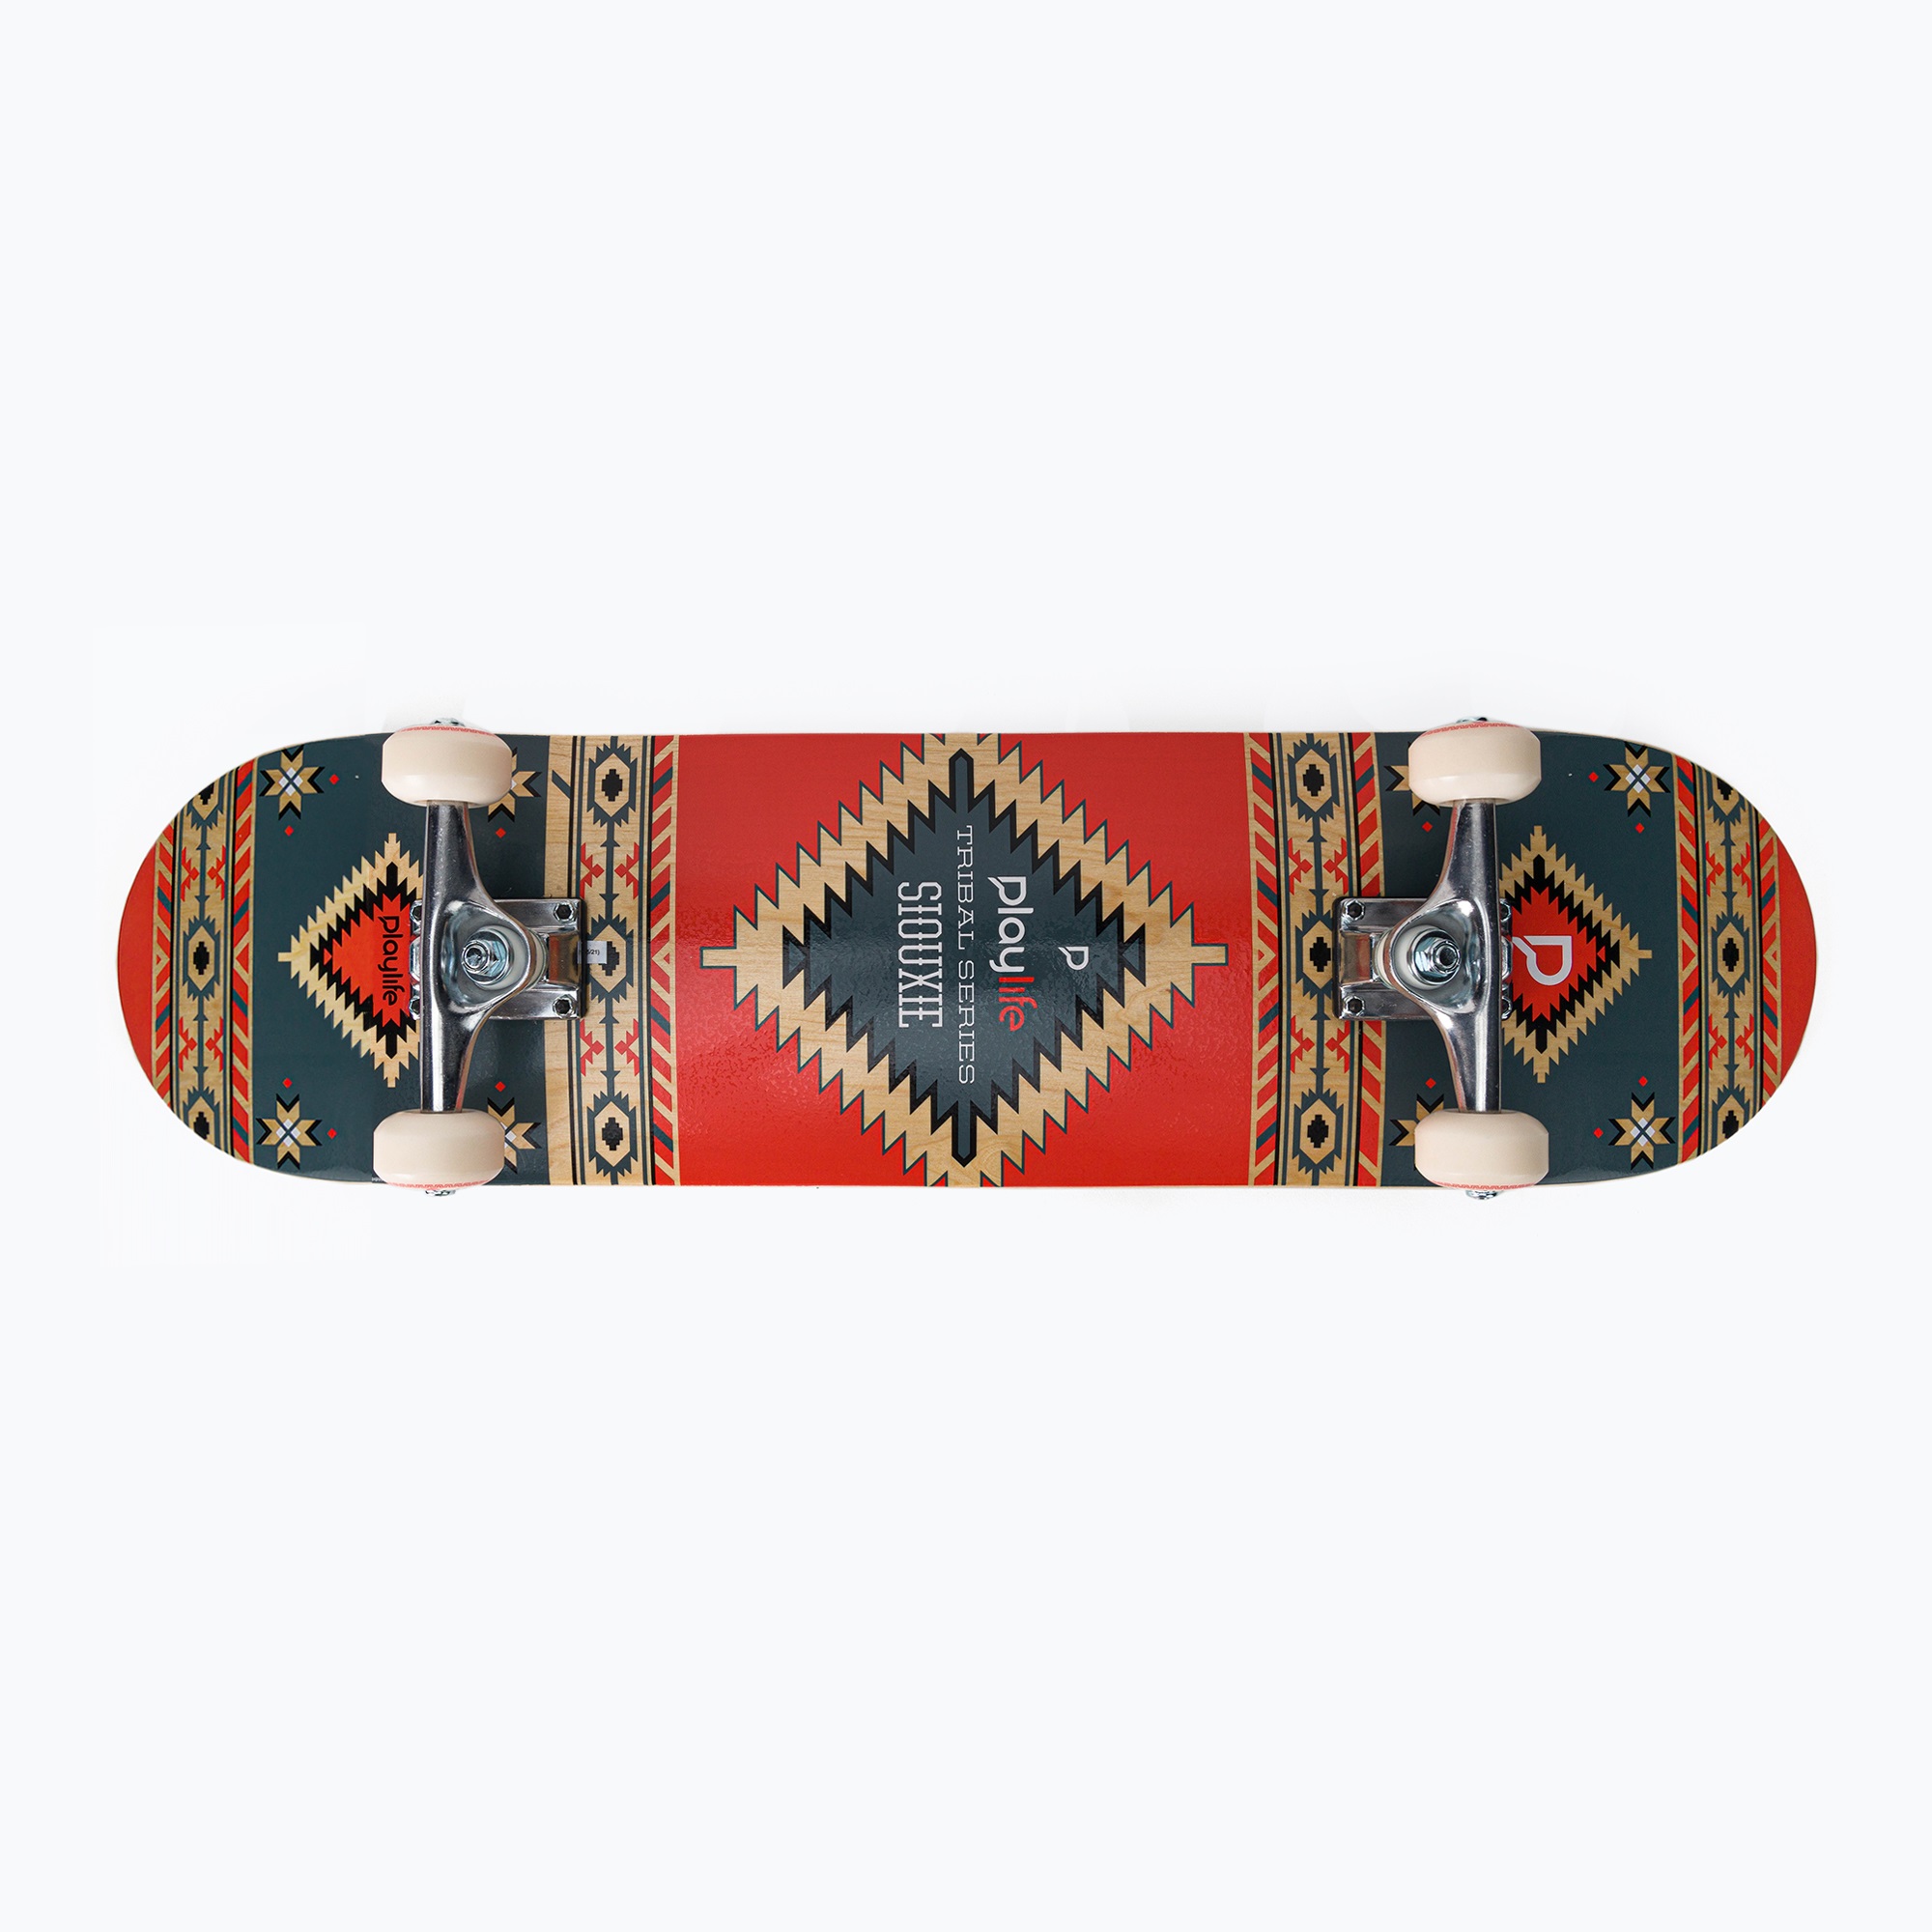 Playlife Tribal Siouxie klasický skateboard 880290